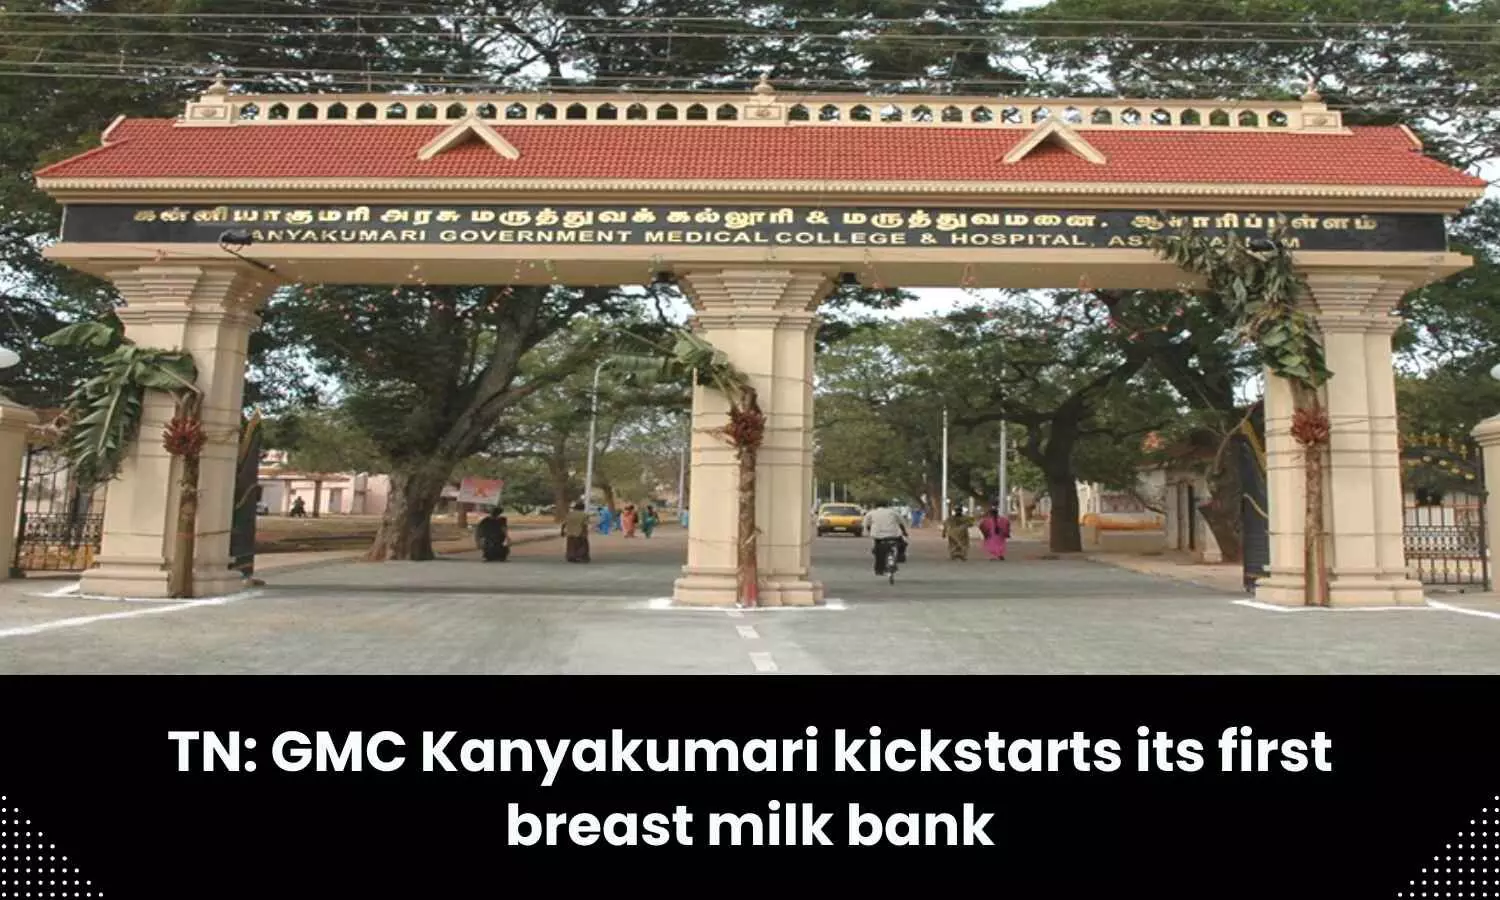 GMC Kanyakumari starts its first breast milk bank